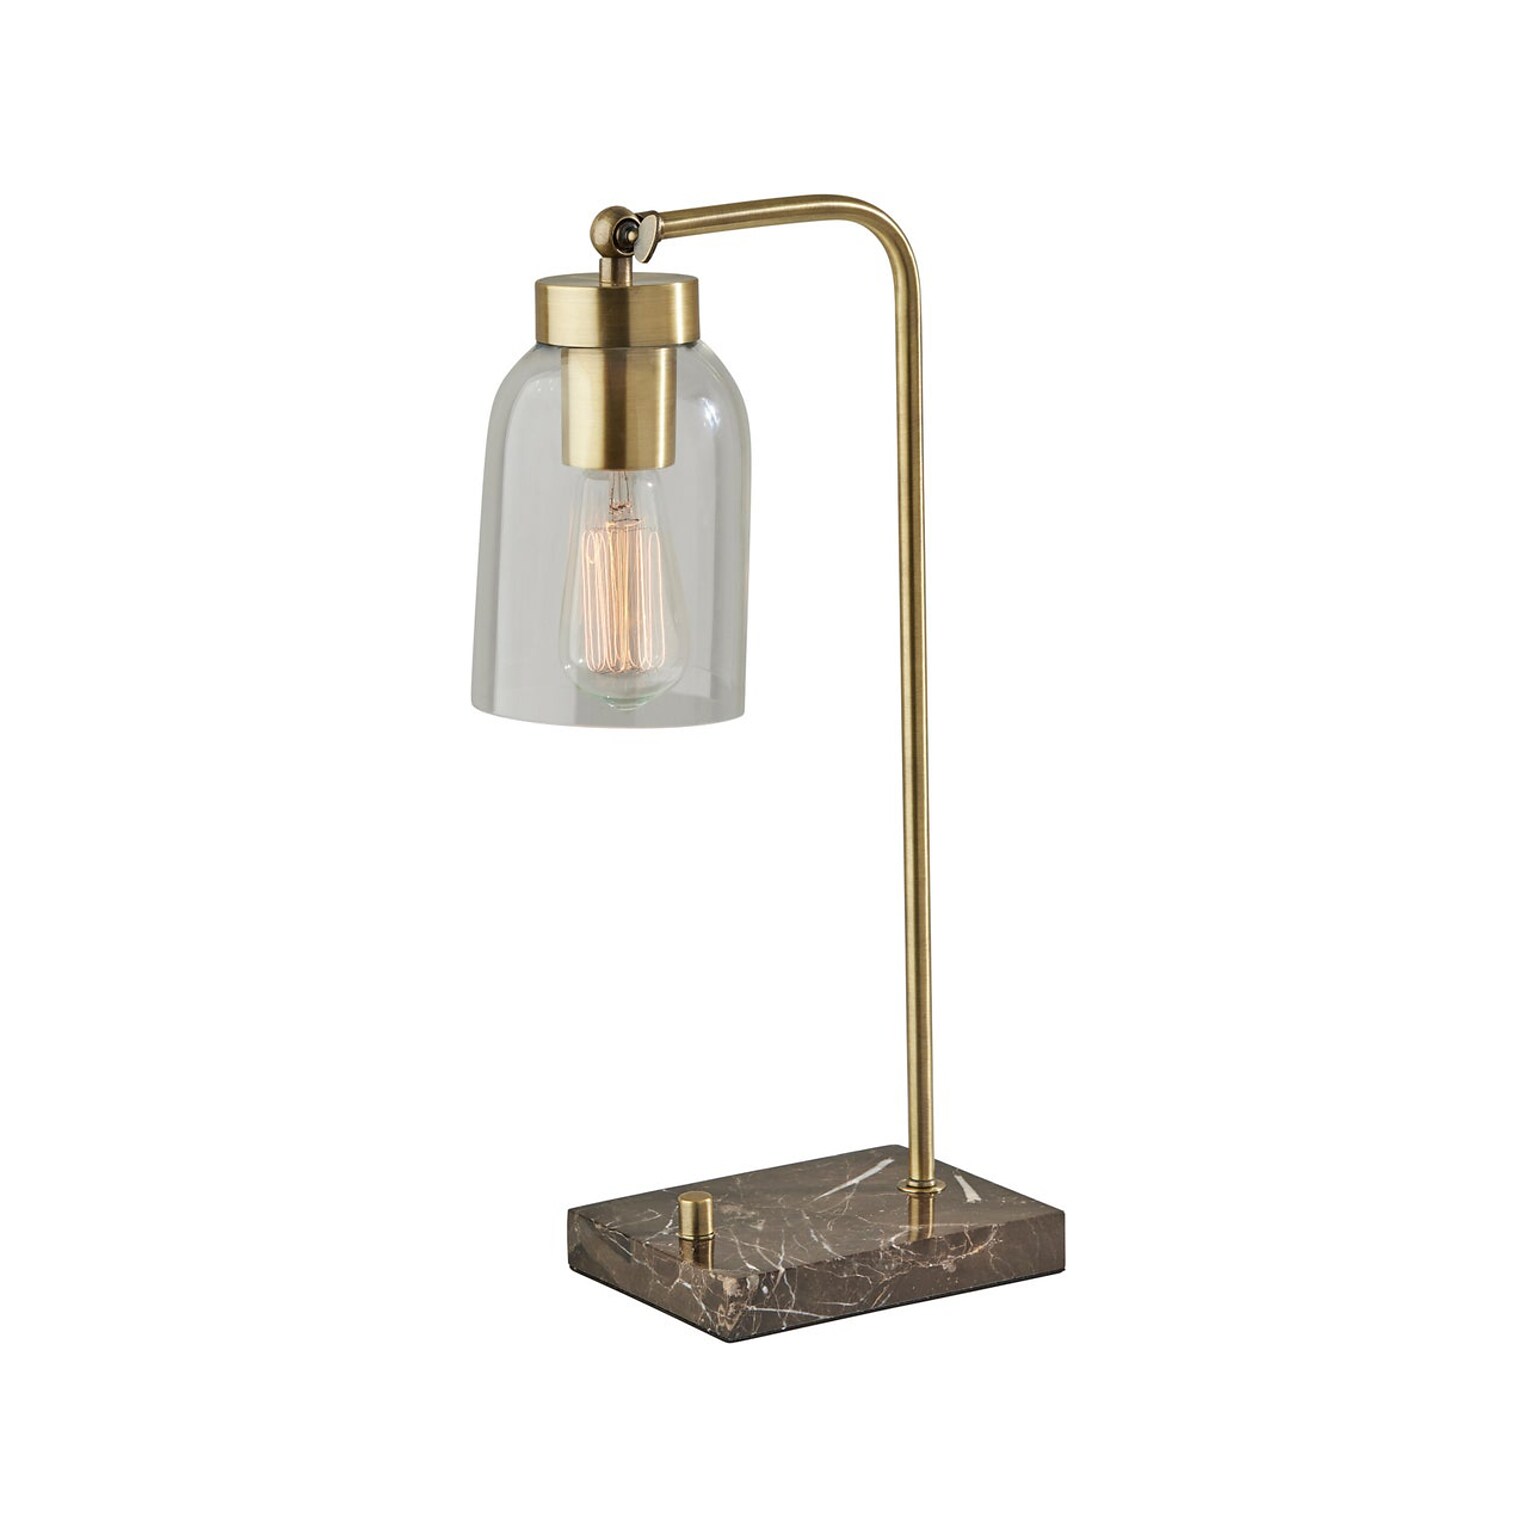 Adesso Bristol Incandescent Desk Lamp, 19, Antique Brass (4288-21)